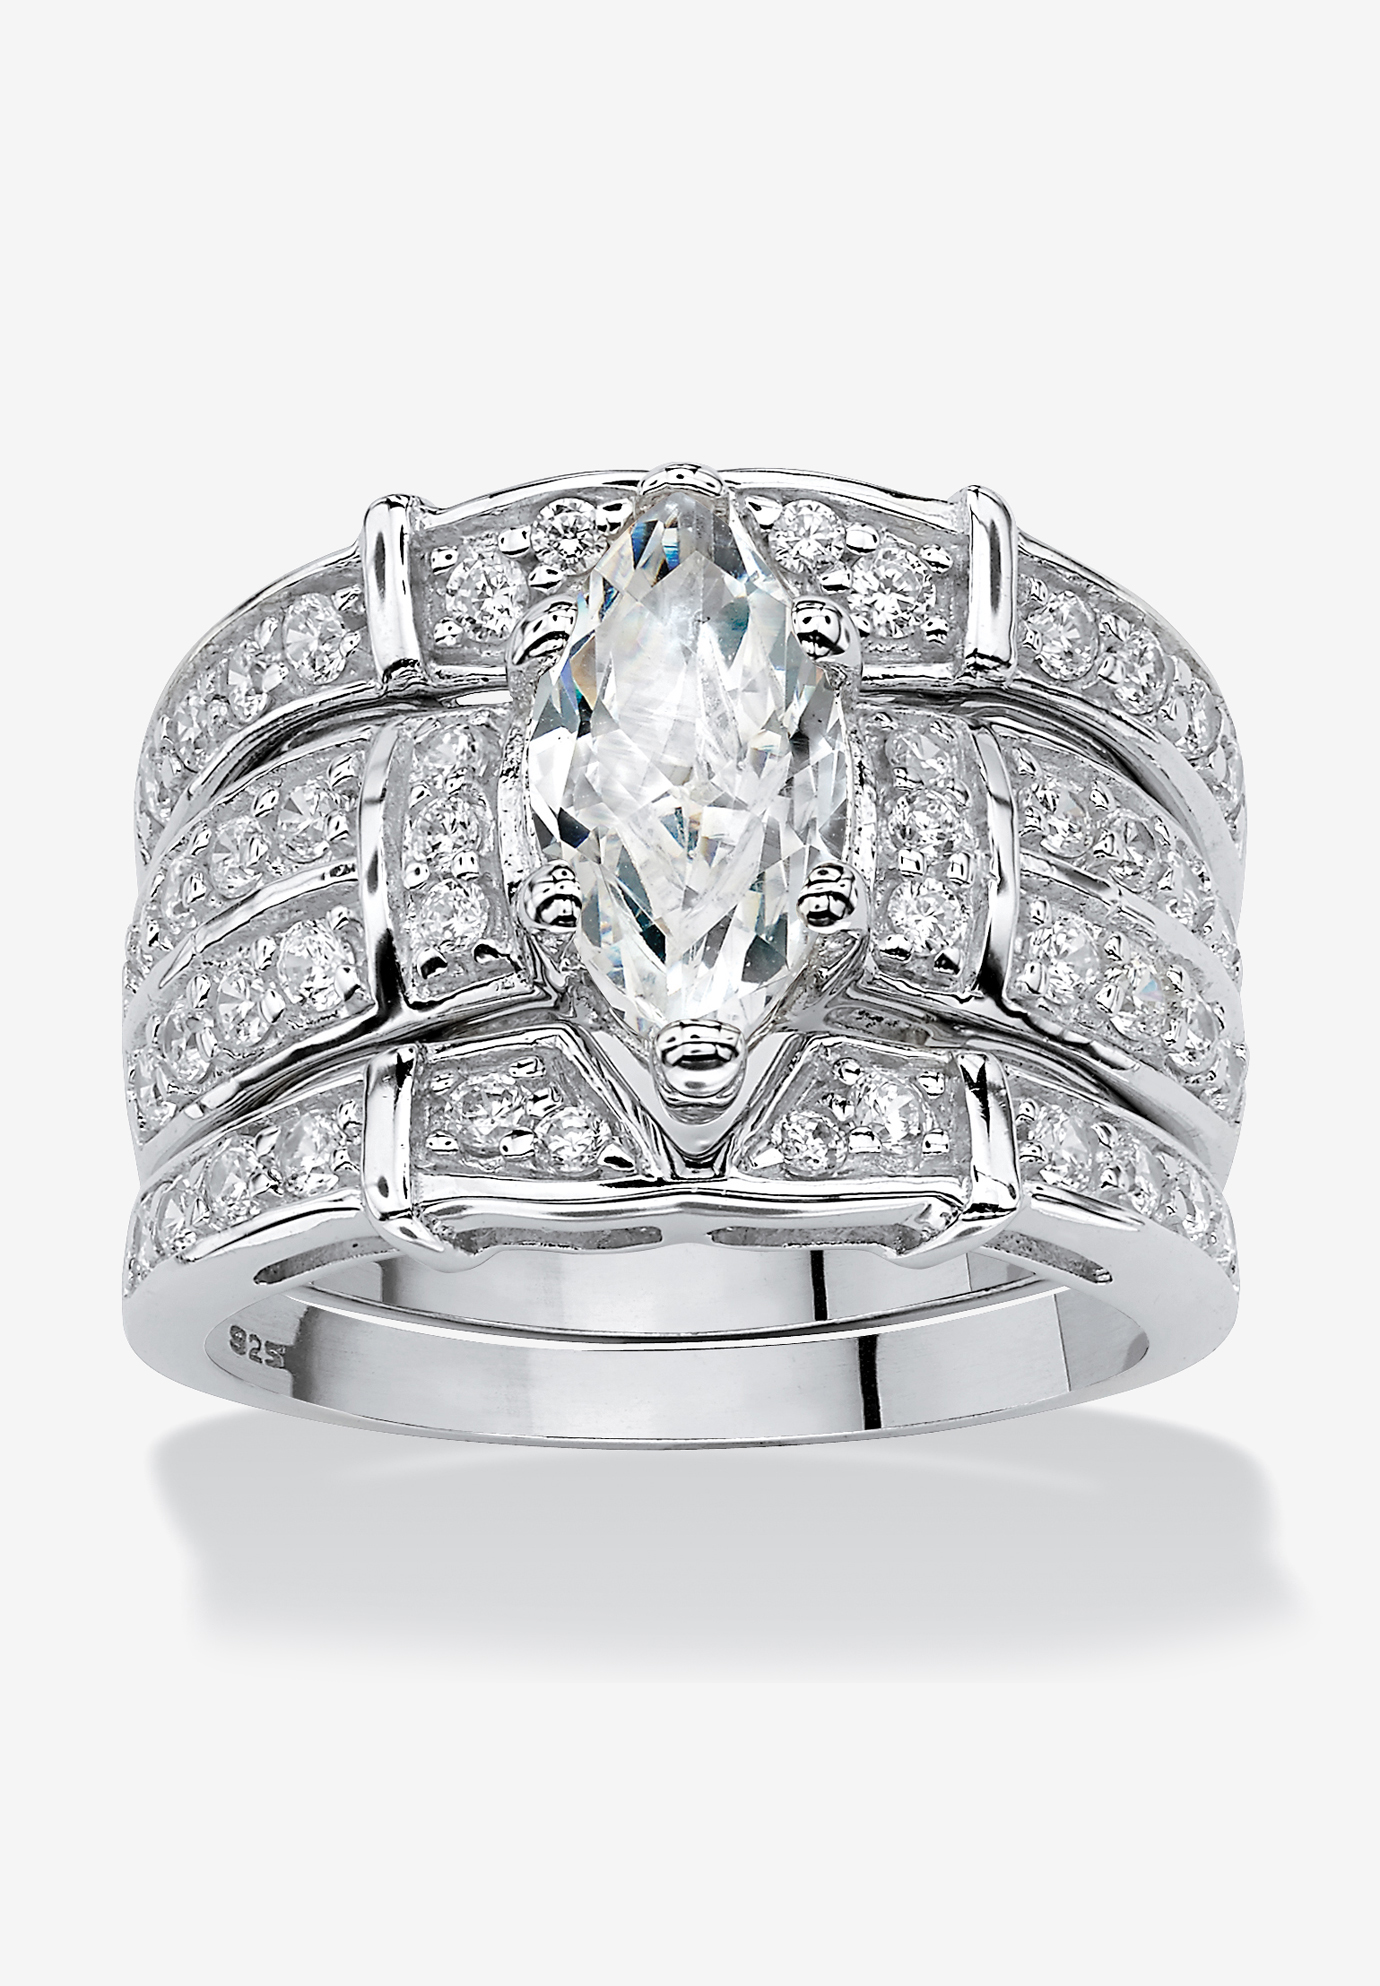 Cubic Zirconia Wedding Bridal Engagement Ring Set Marquise 3.86 CT SIZE 6 